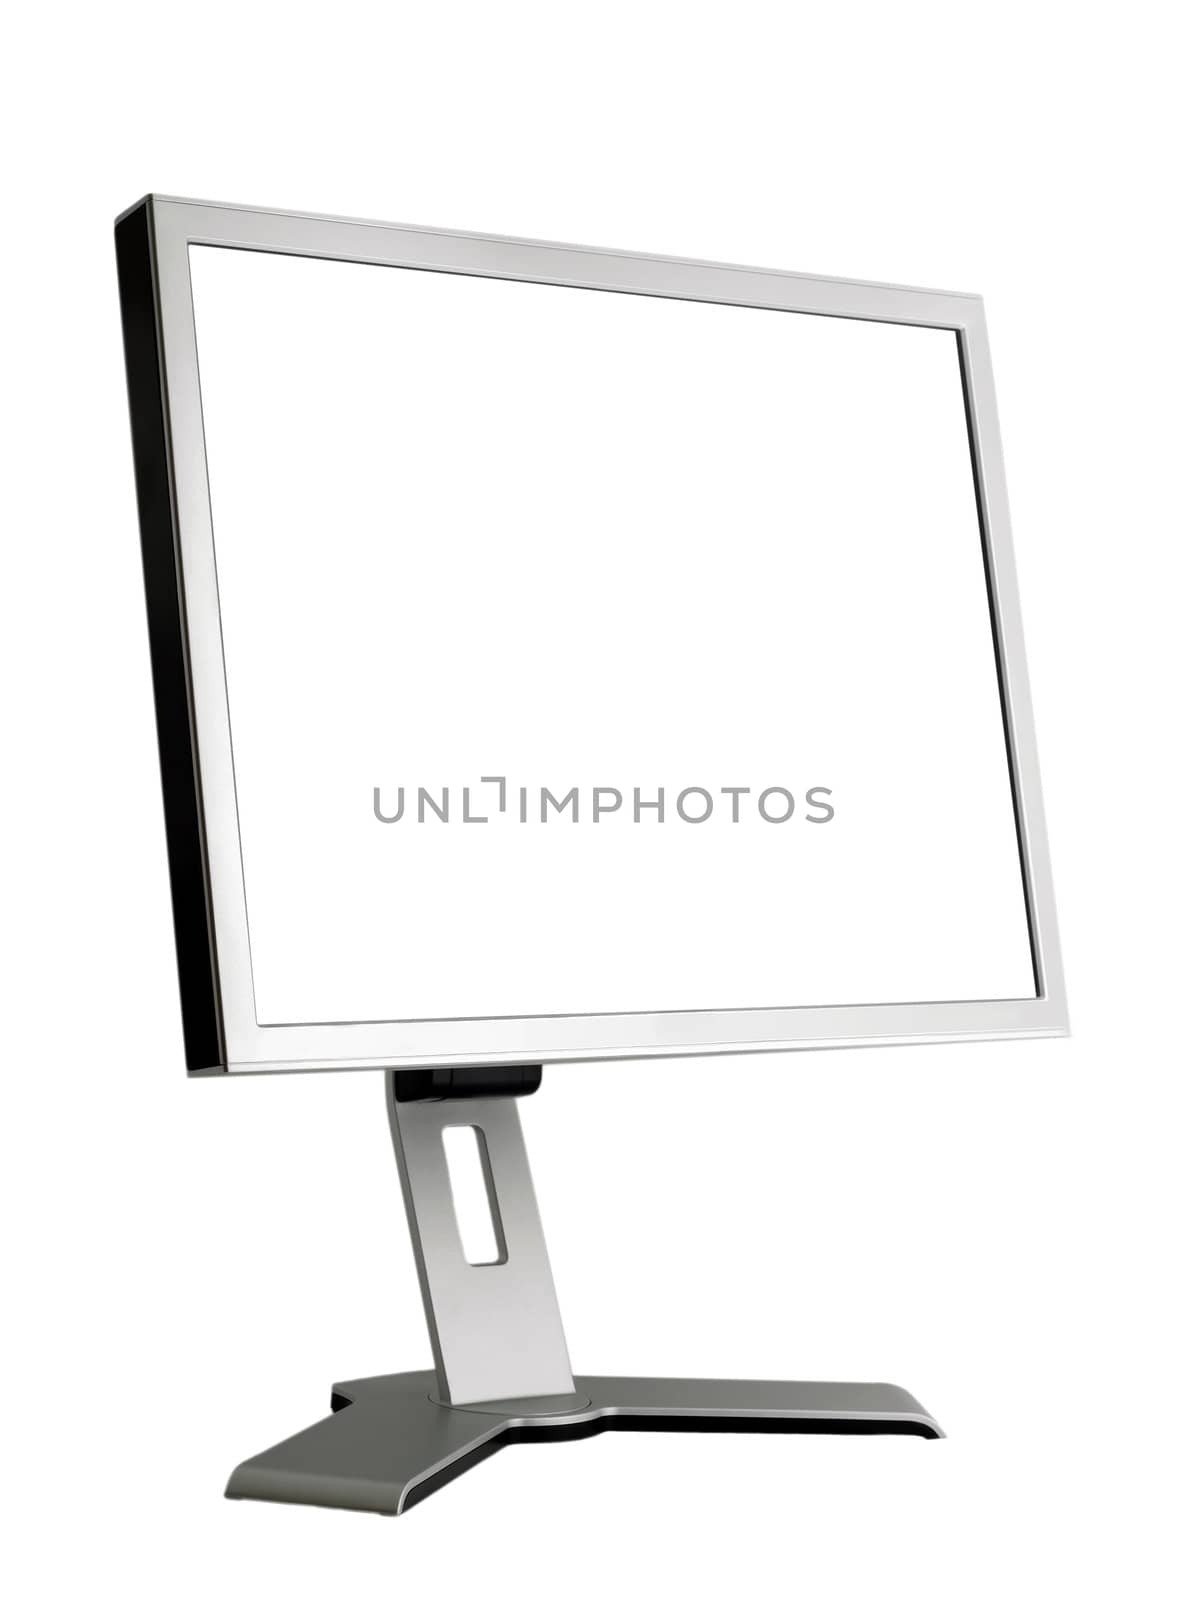 Computer monitor by Vladyslav